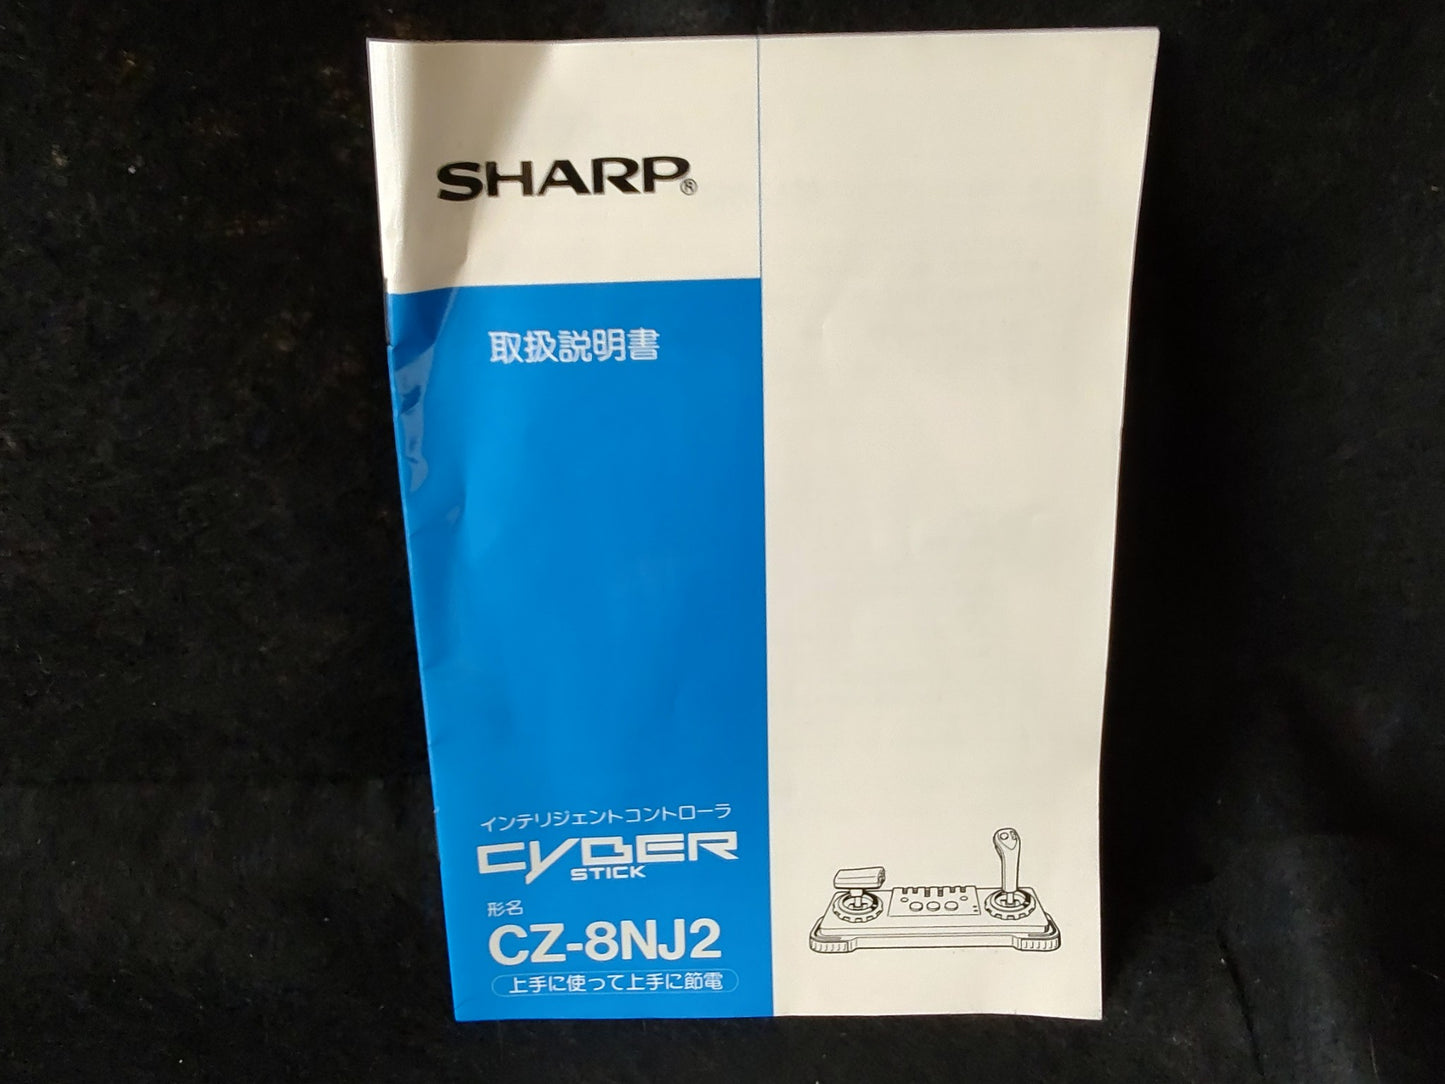 SHARP X68000 Cyber Stick Intelligent Controller CZ-8NJ2, No-tested -g0201-